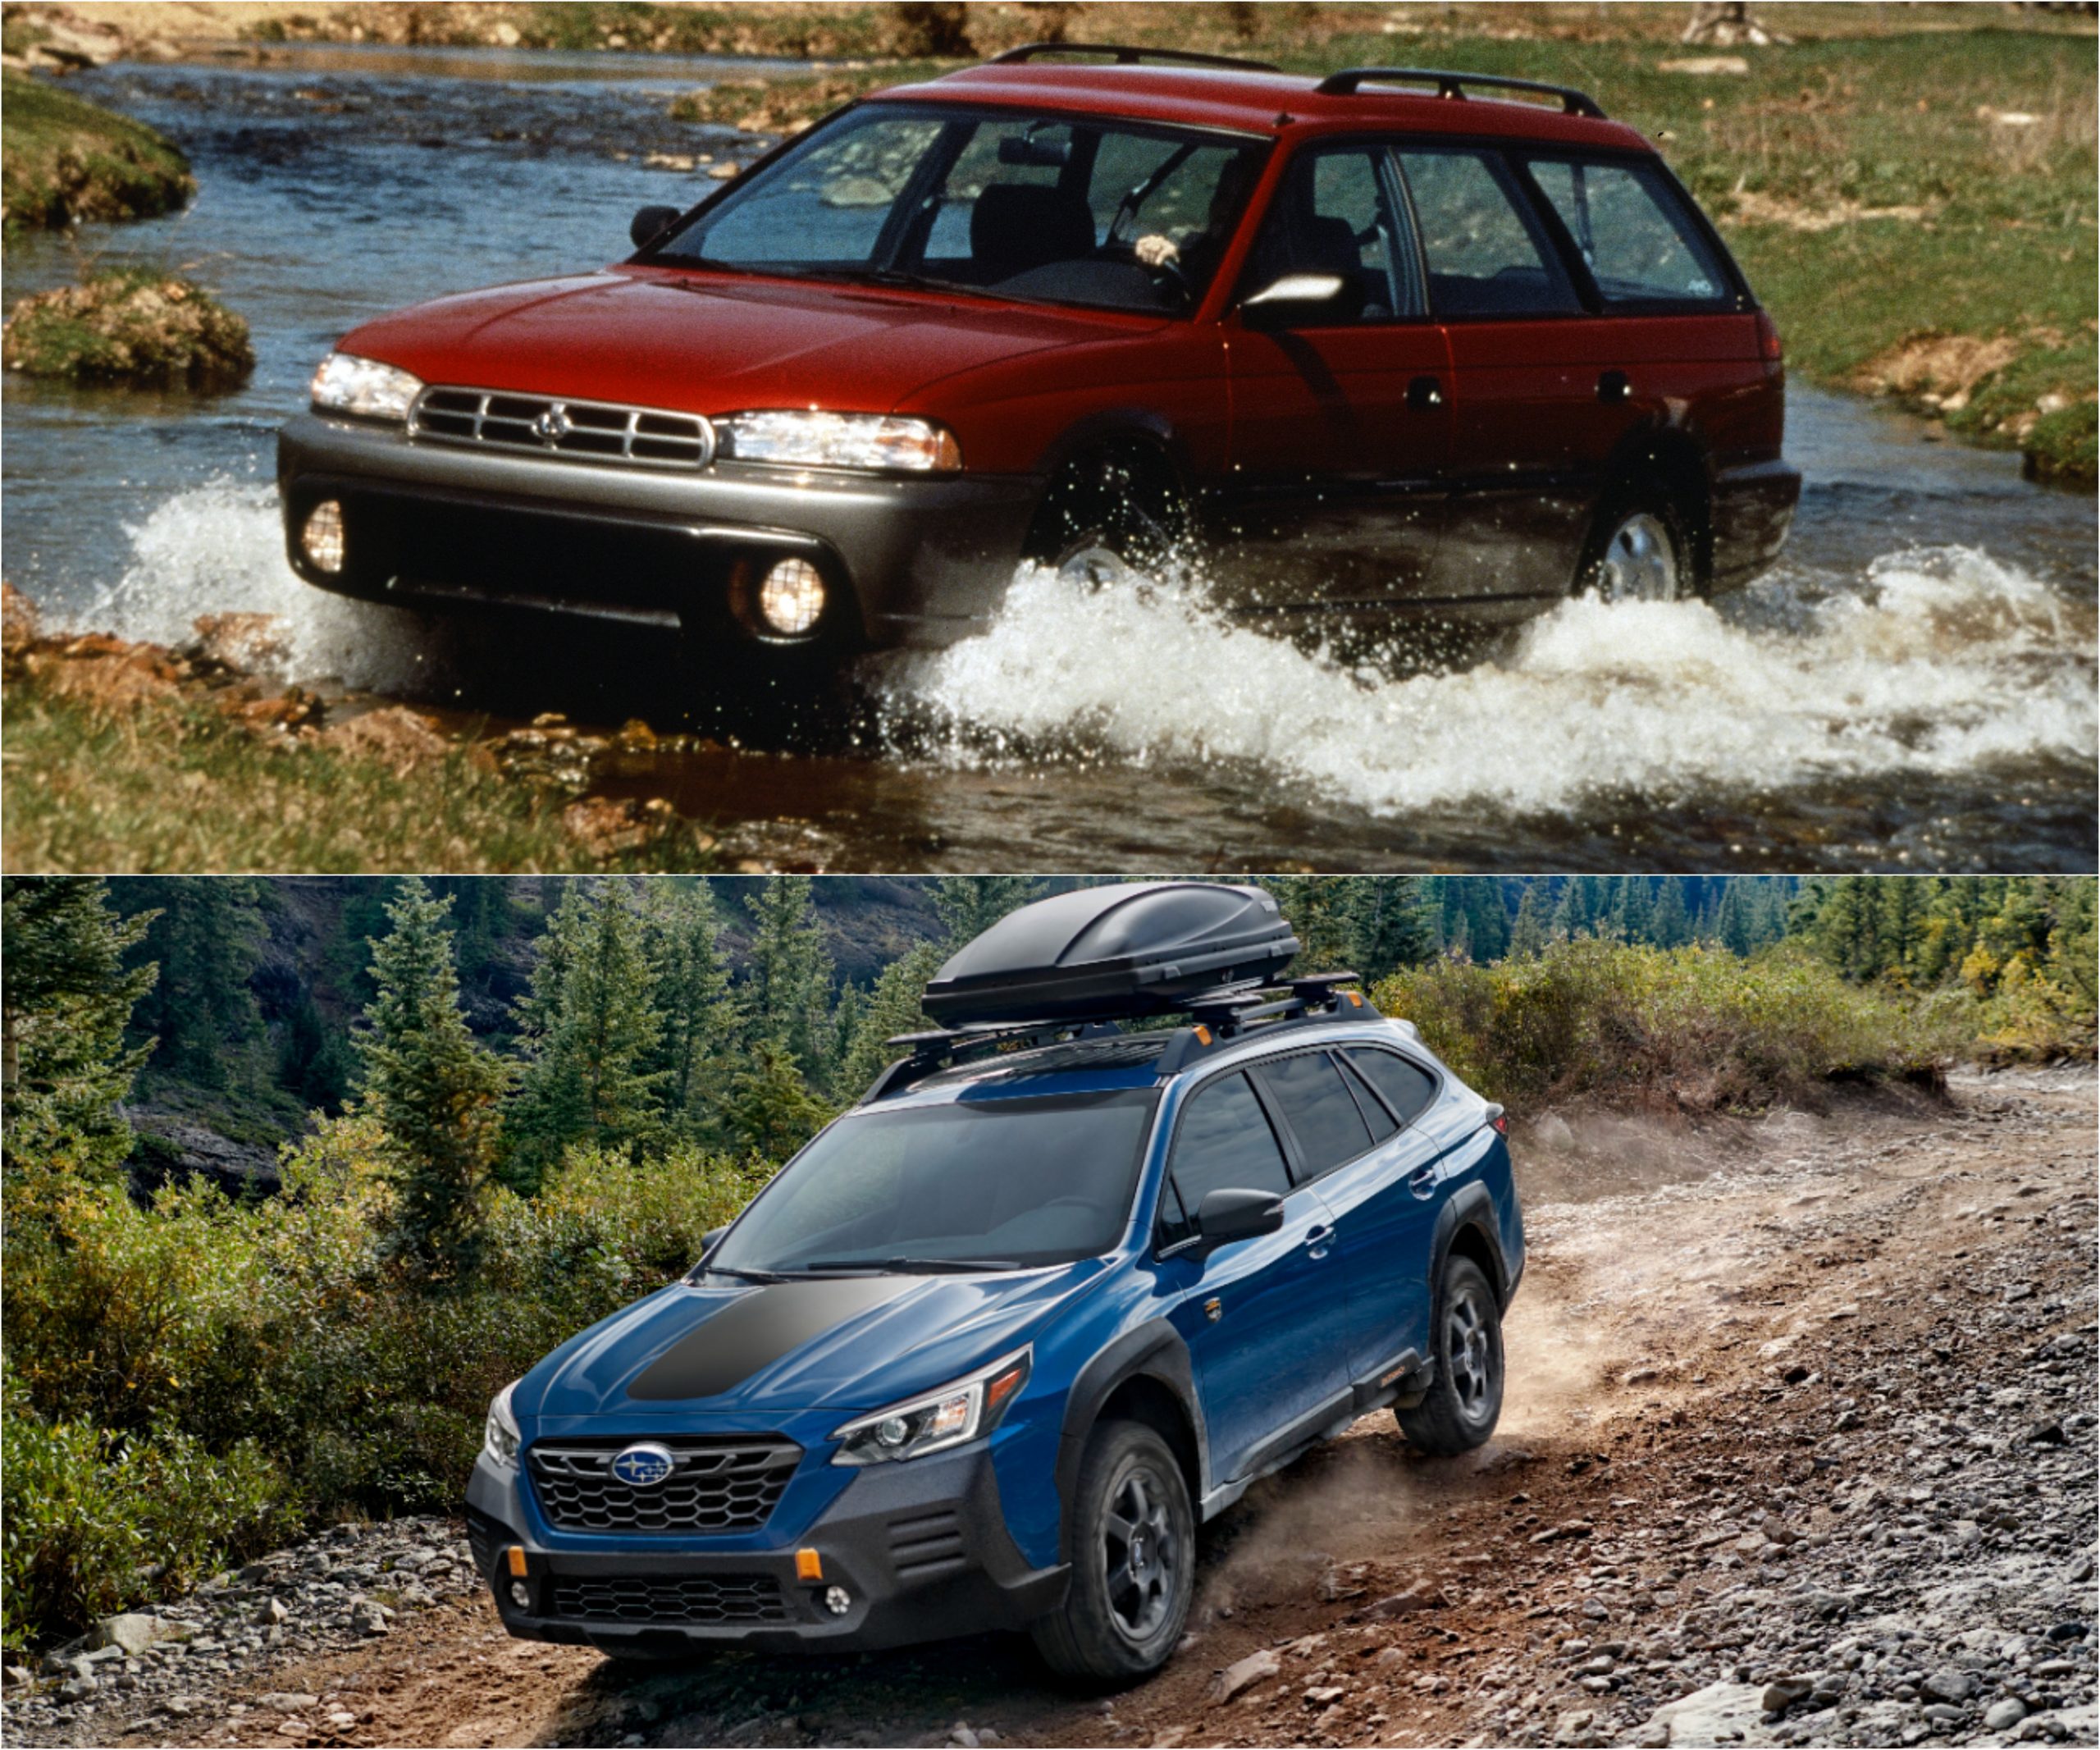 1996 Subaru Legacy Outback (Top) and 2022 Subaru Outback Wilderness (Bottom)